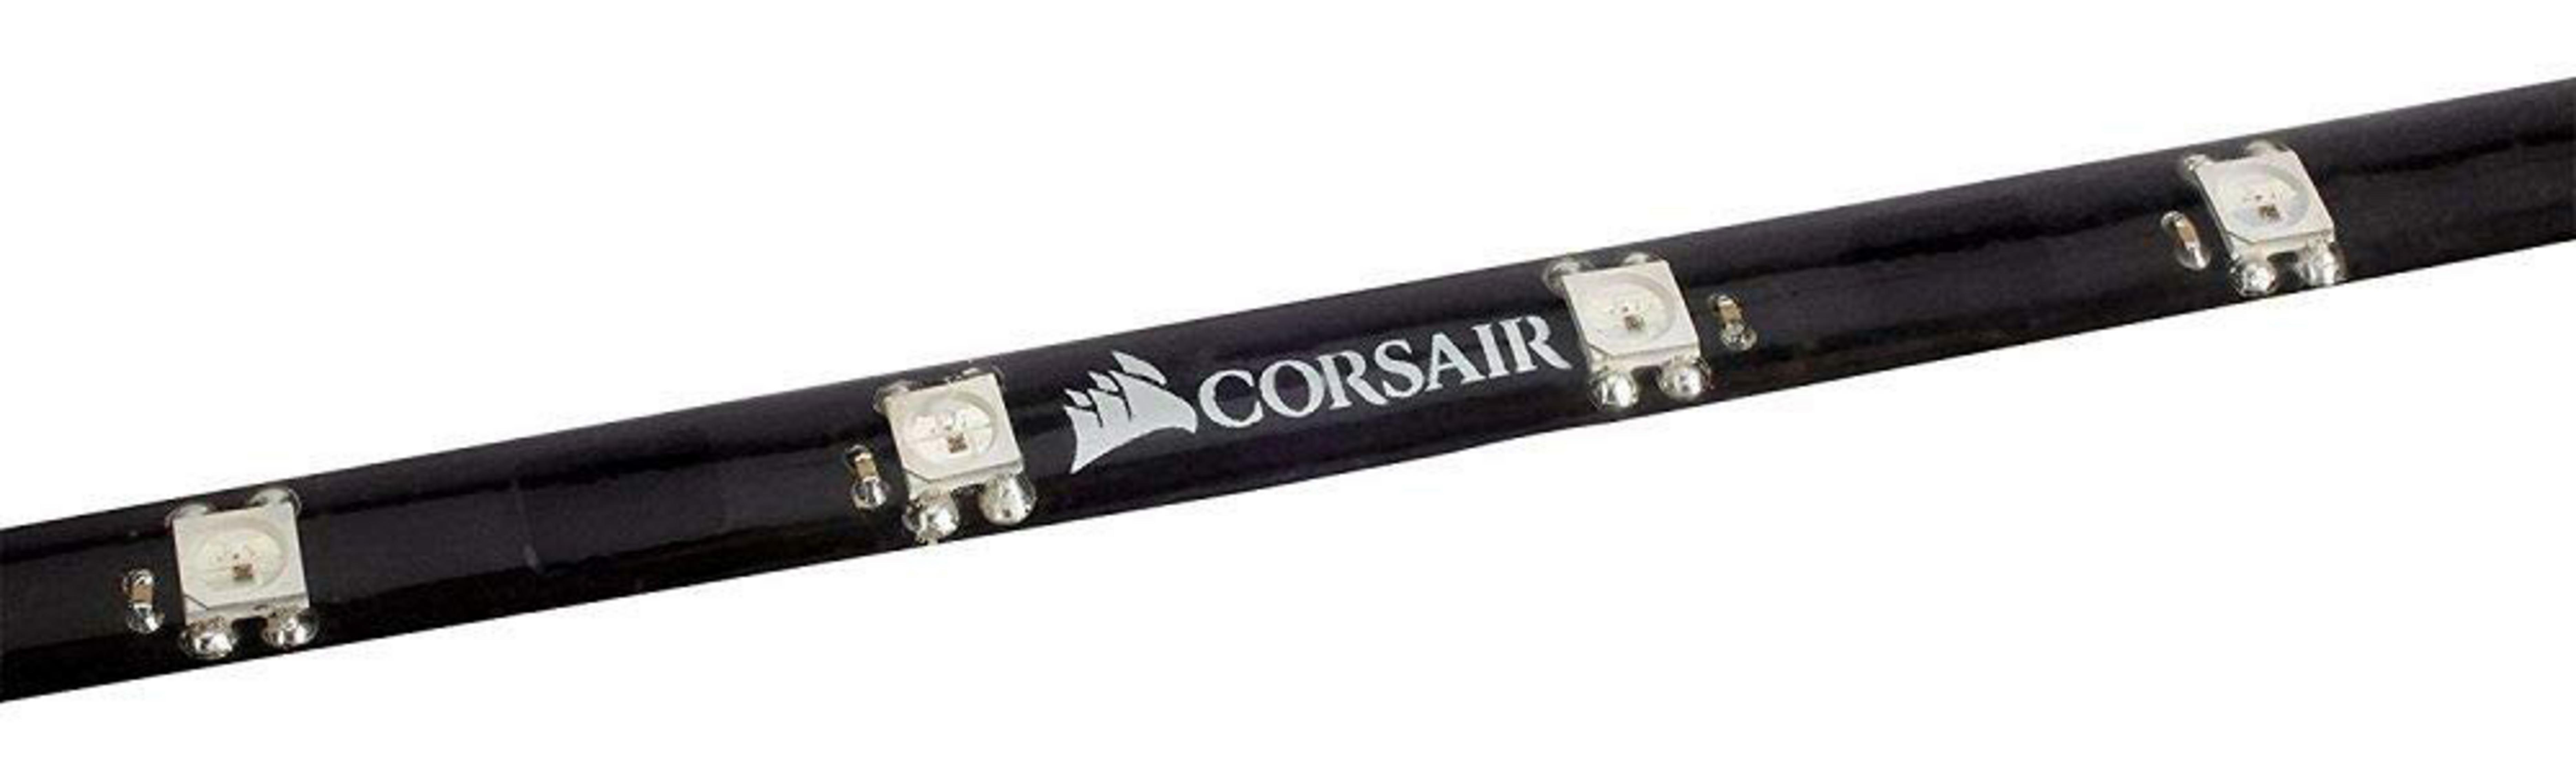 CORSAIR CL-8930002 RGB LED LIGHTING 410 Gehäuseleuchte, KIT, mm EXPANSION PRO